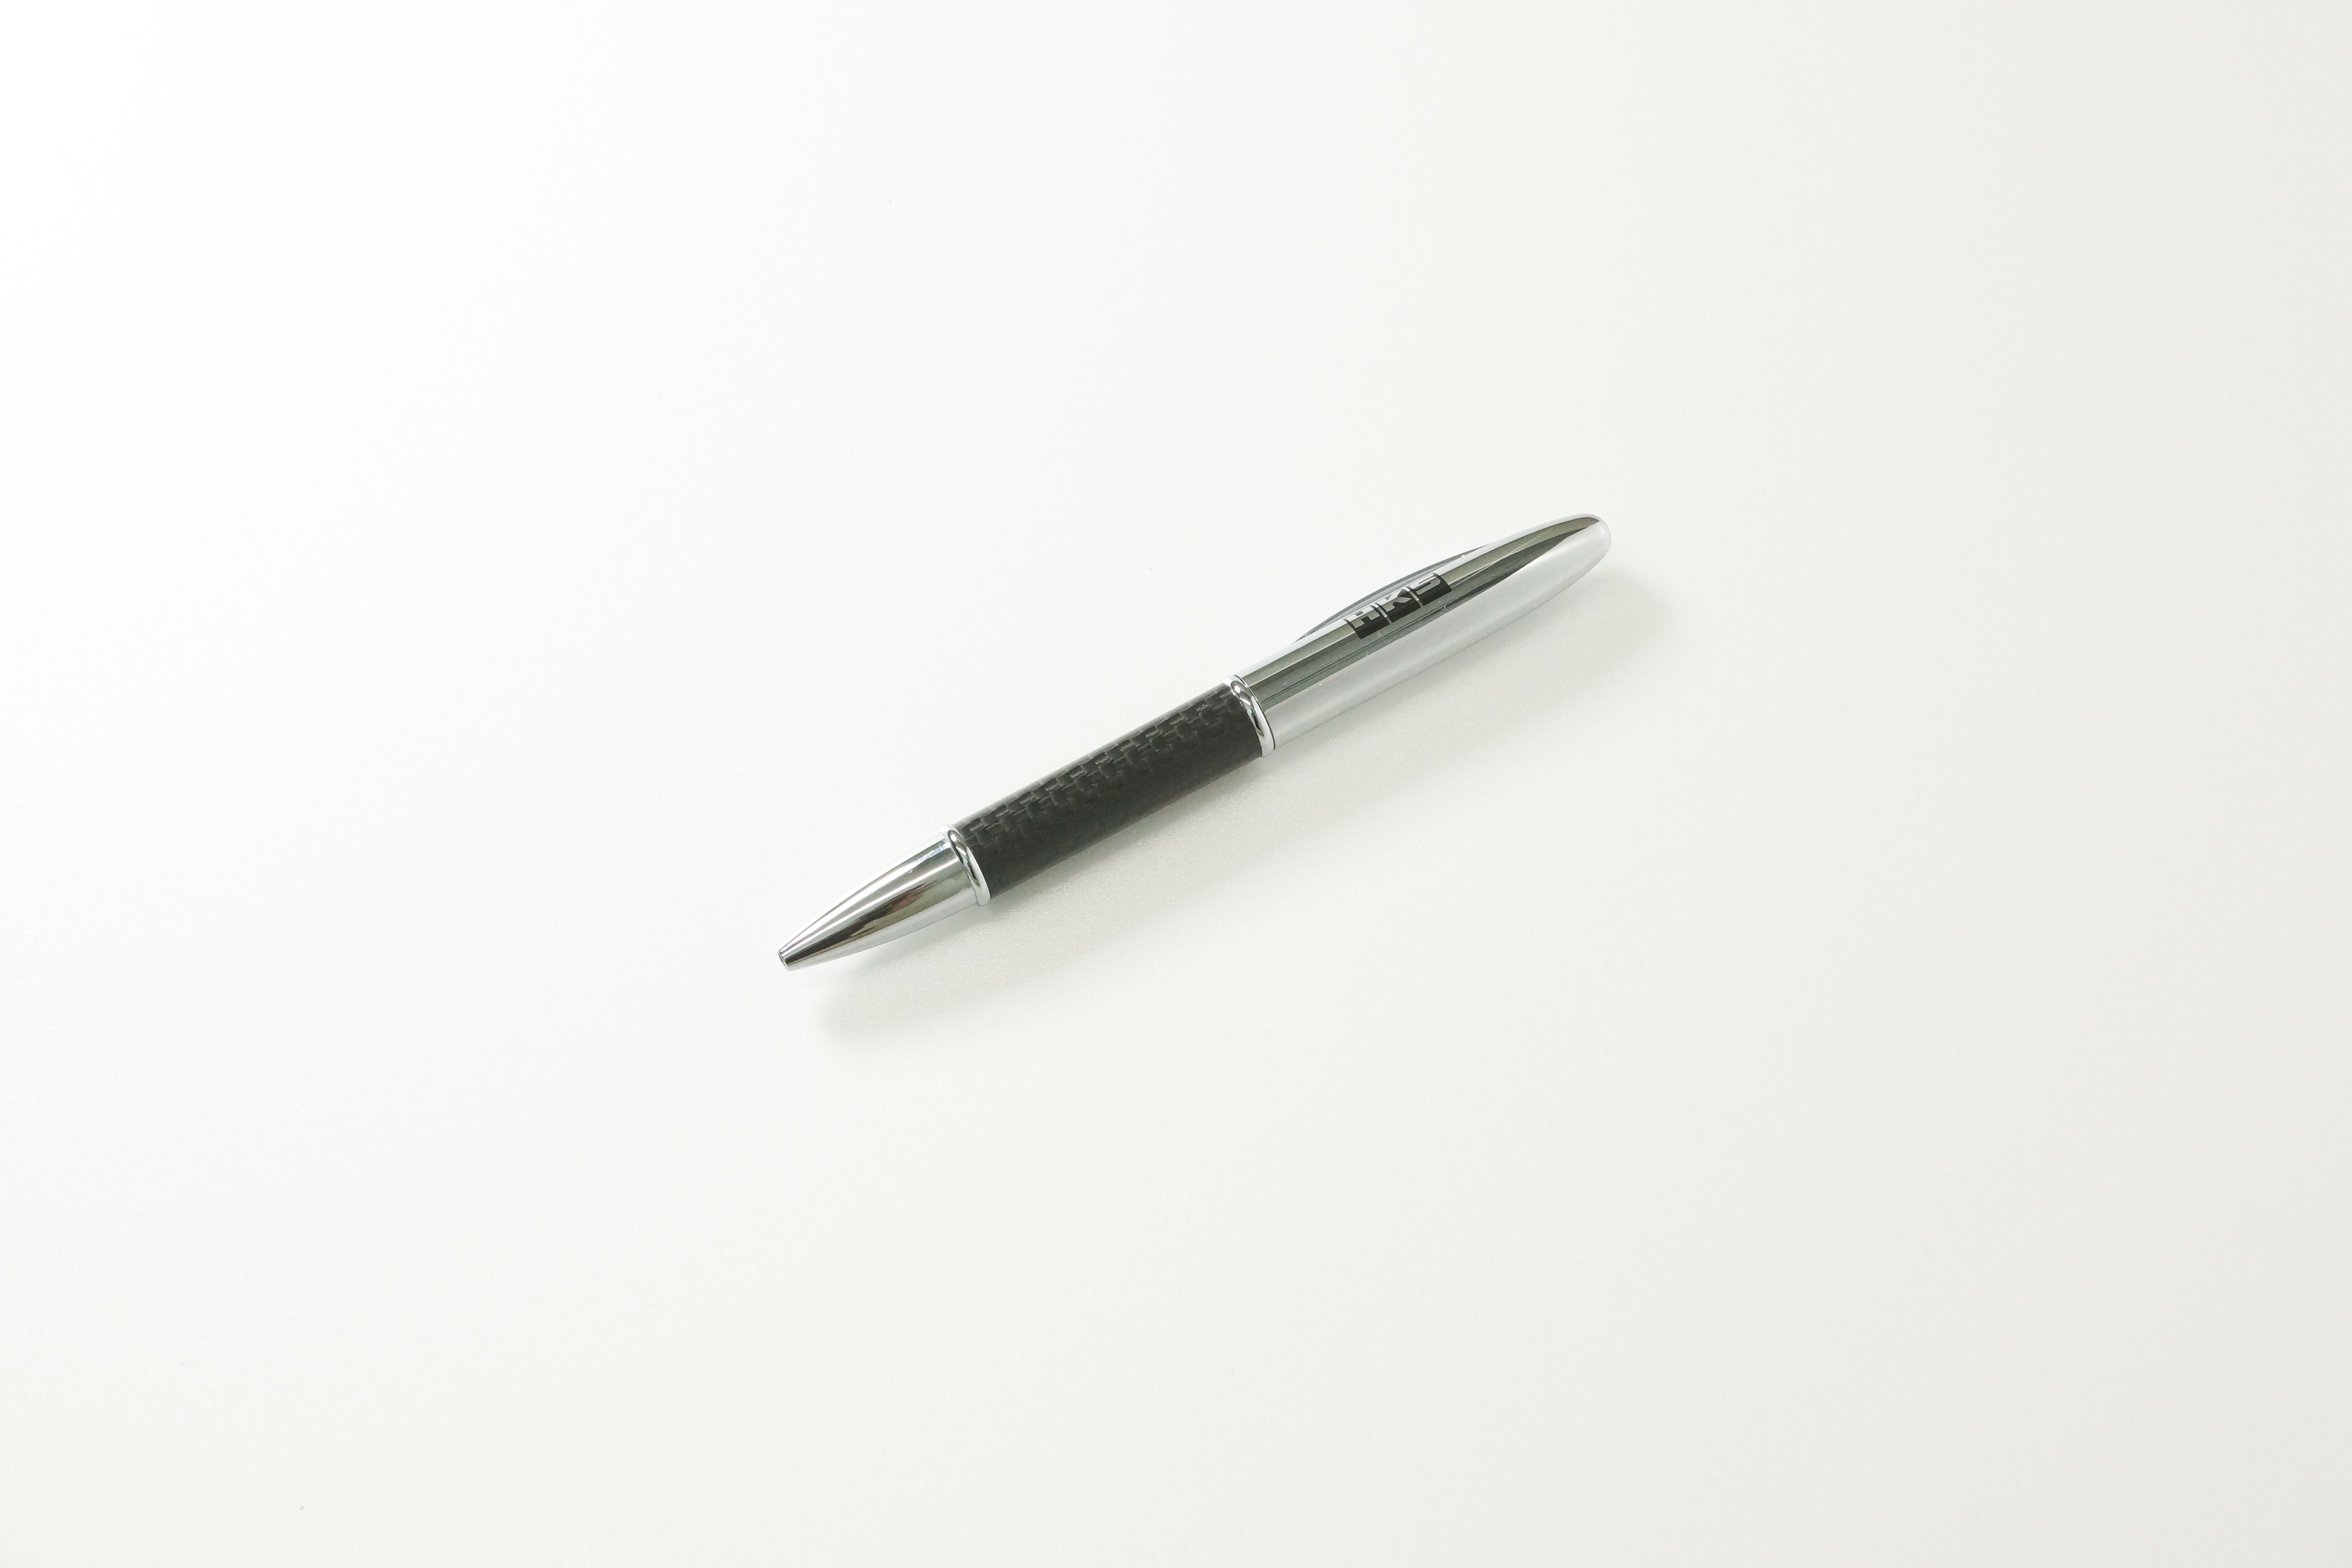 HKS Carbon Ballpoint Pen